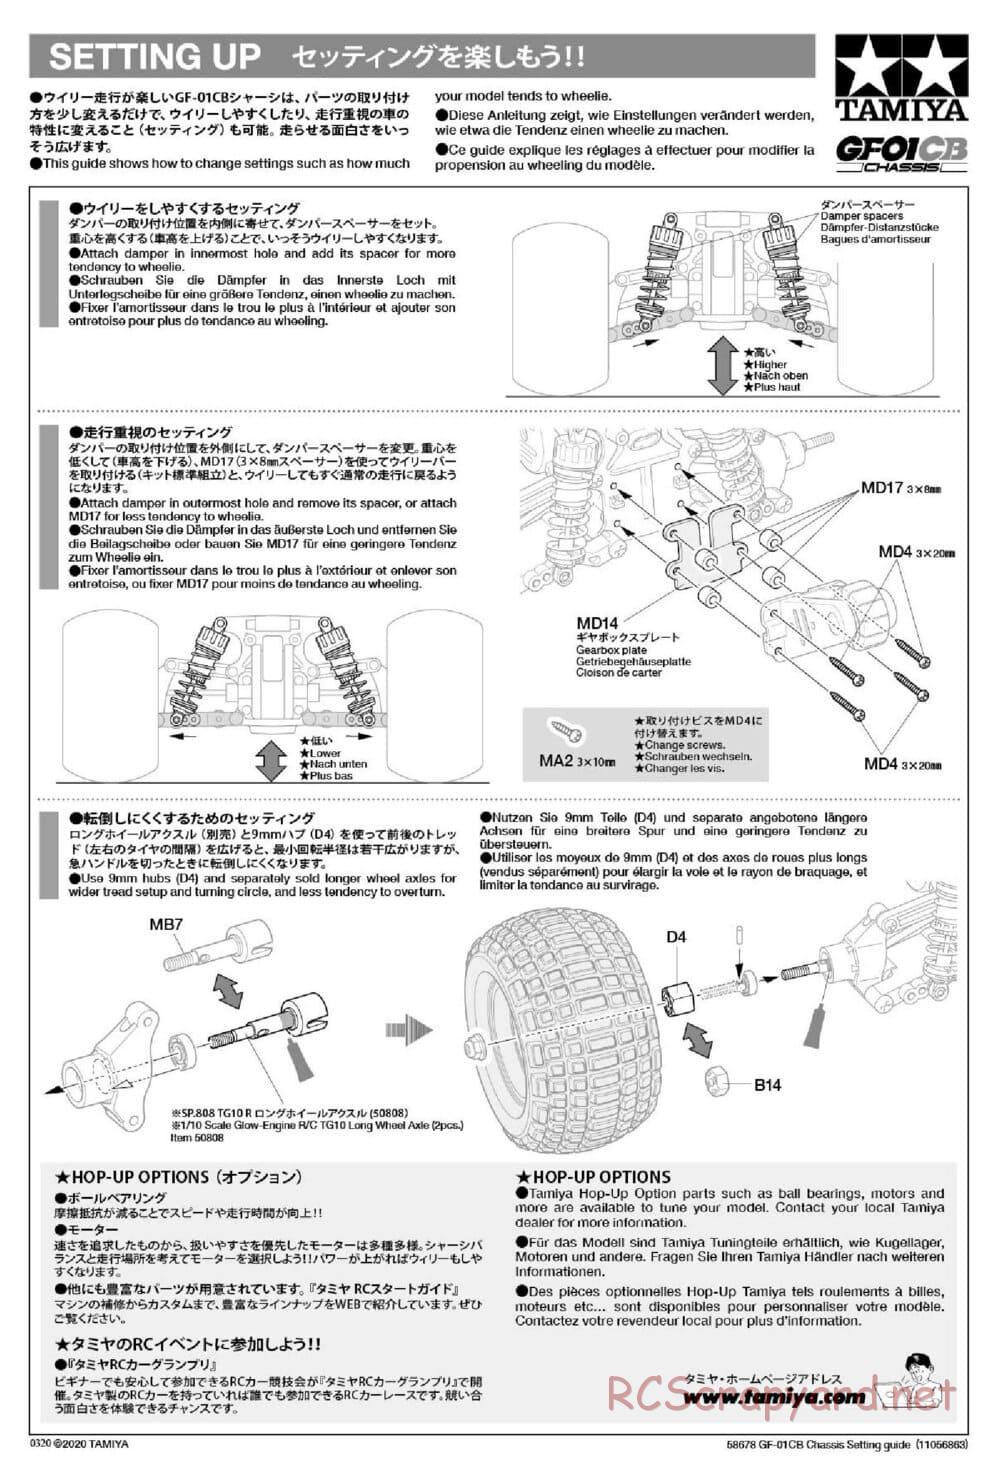 Tamiya - Comical Avante - GF-01CB Chassis - Manual - Page 21